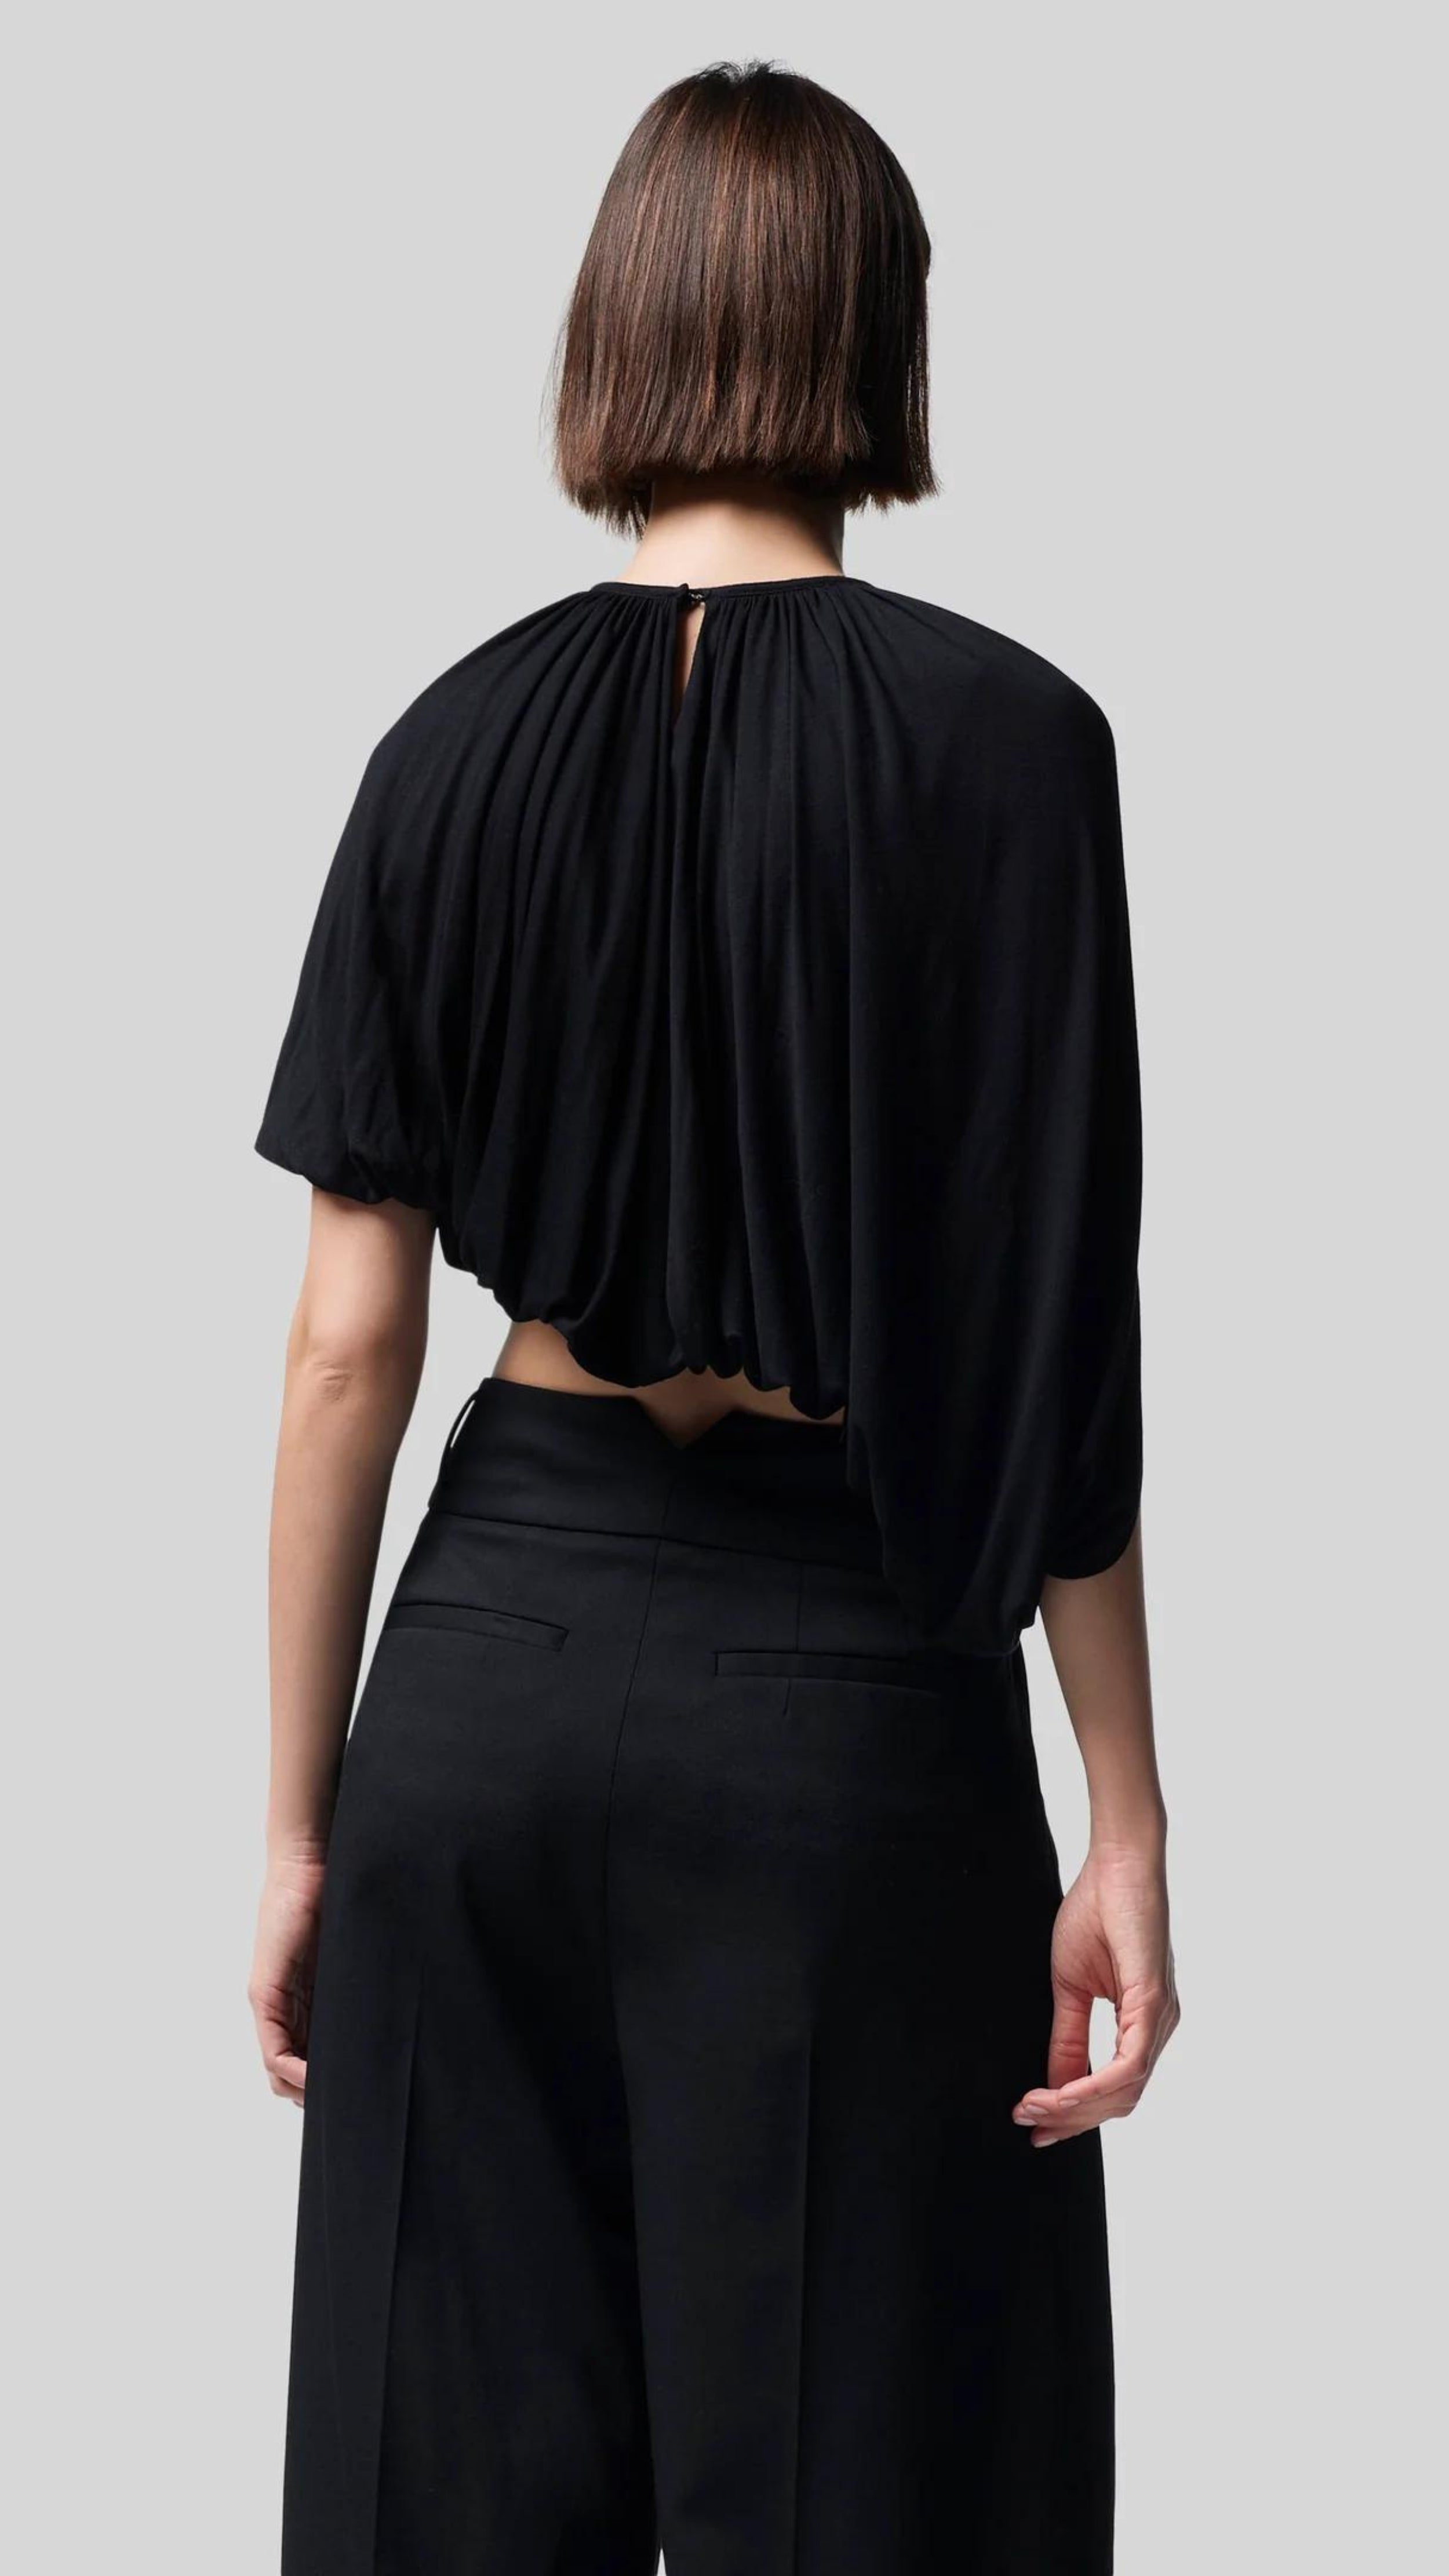 Altuzarra Naxos Top in Black. Draped jersey create a fluid look with an asymmetrical hemline. Shown on model facing to the back.